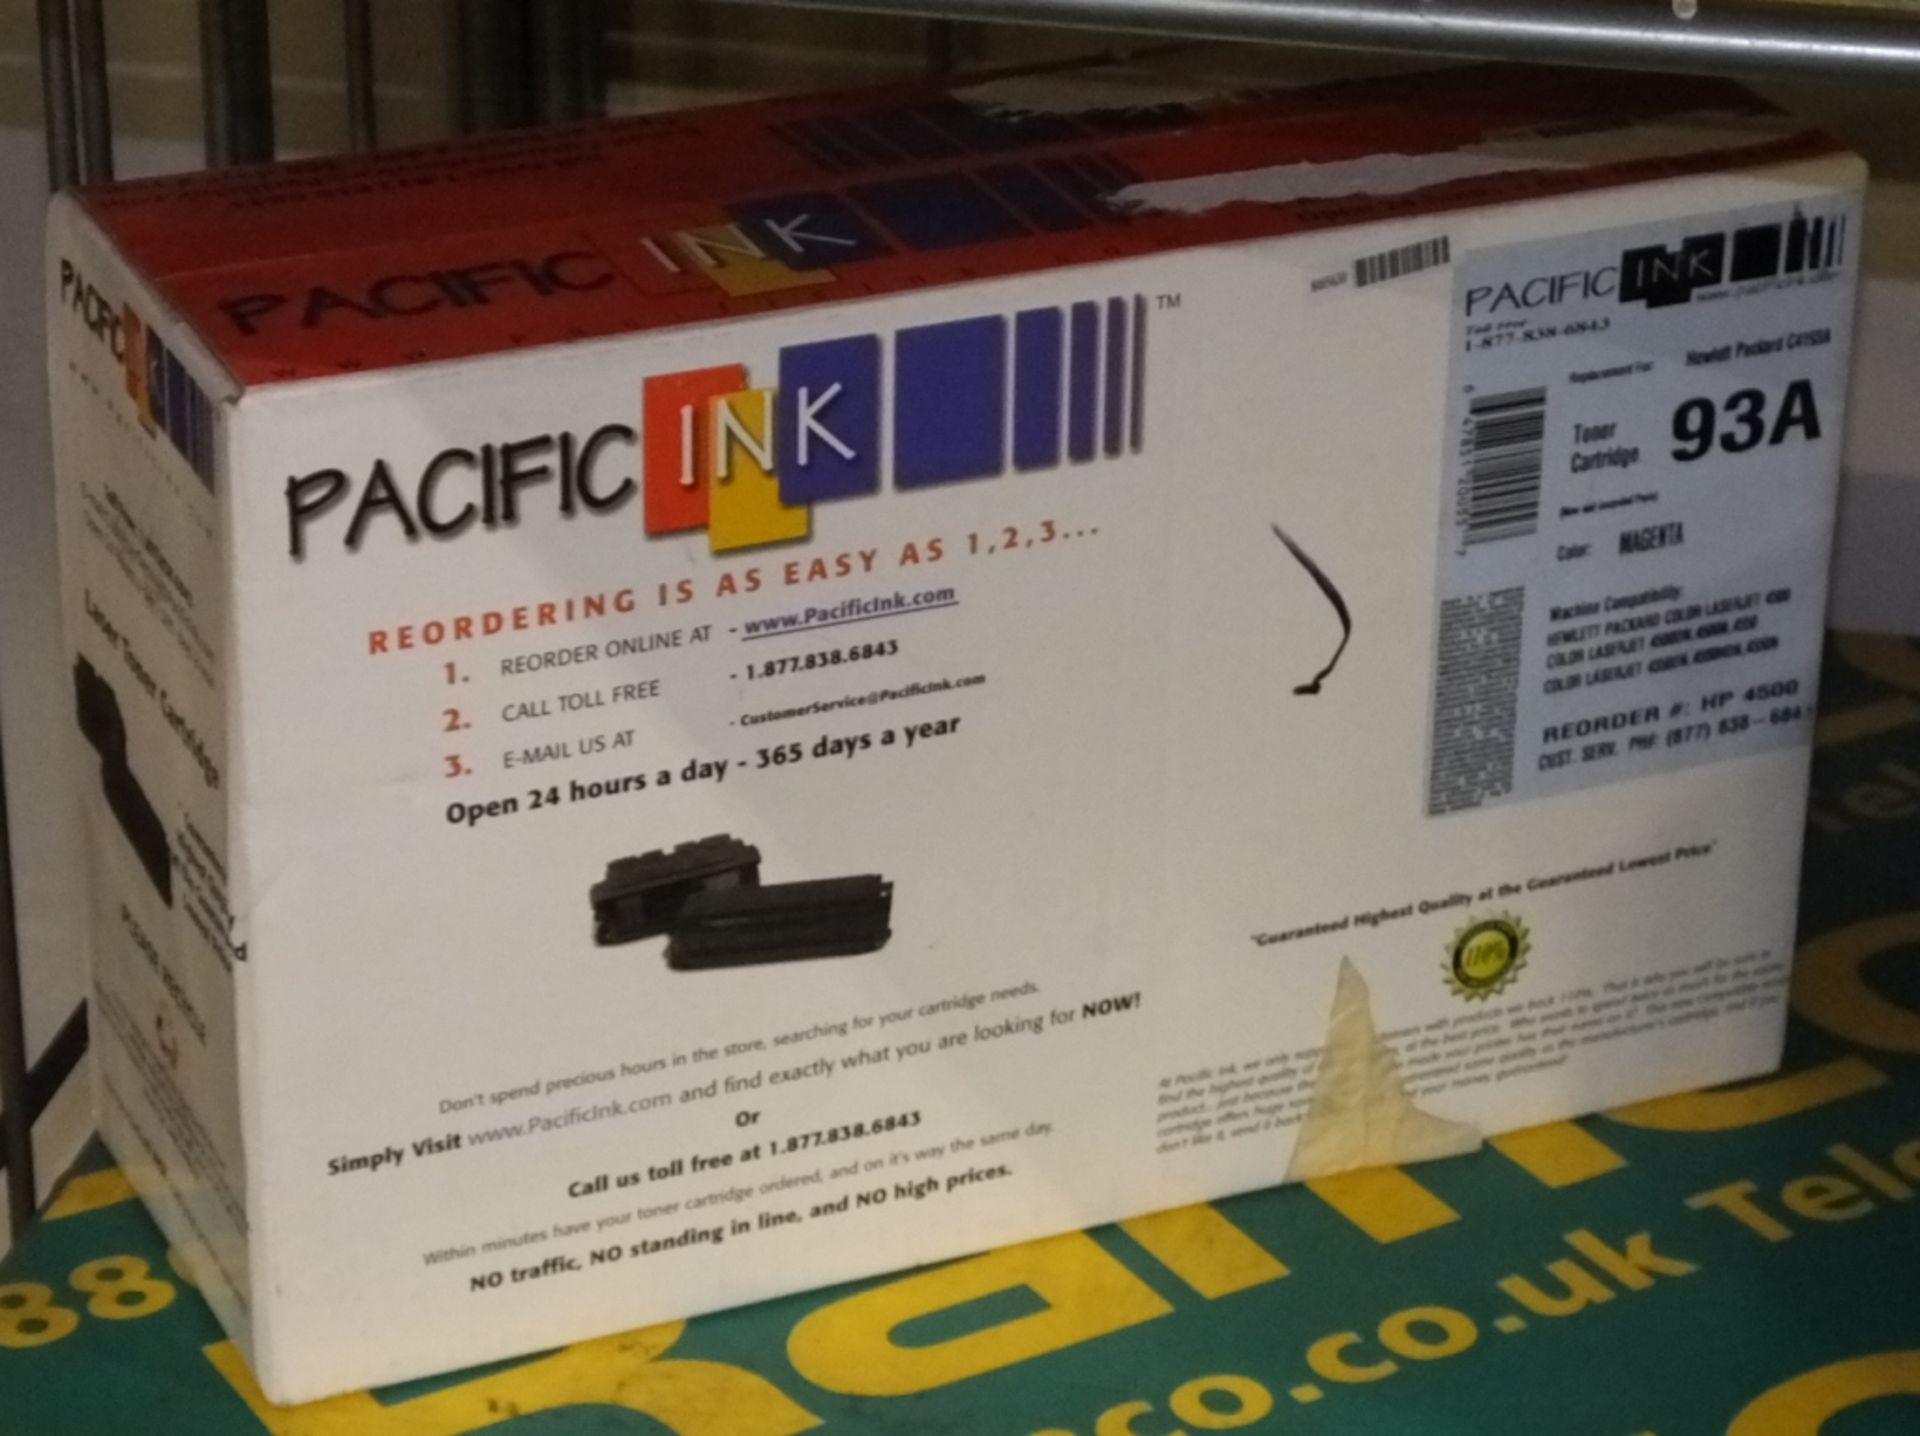 Pacific Ink toner cartridge 93A magenta, Premier (HP Compatible) 4500 series black toner c - Image 4 of 4